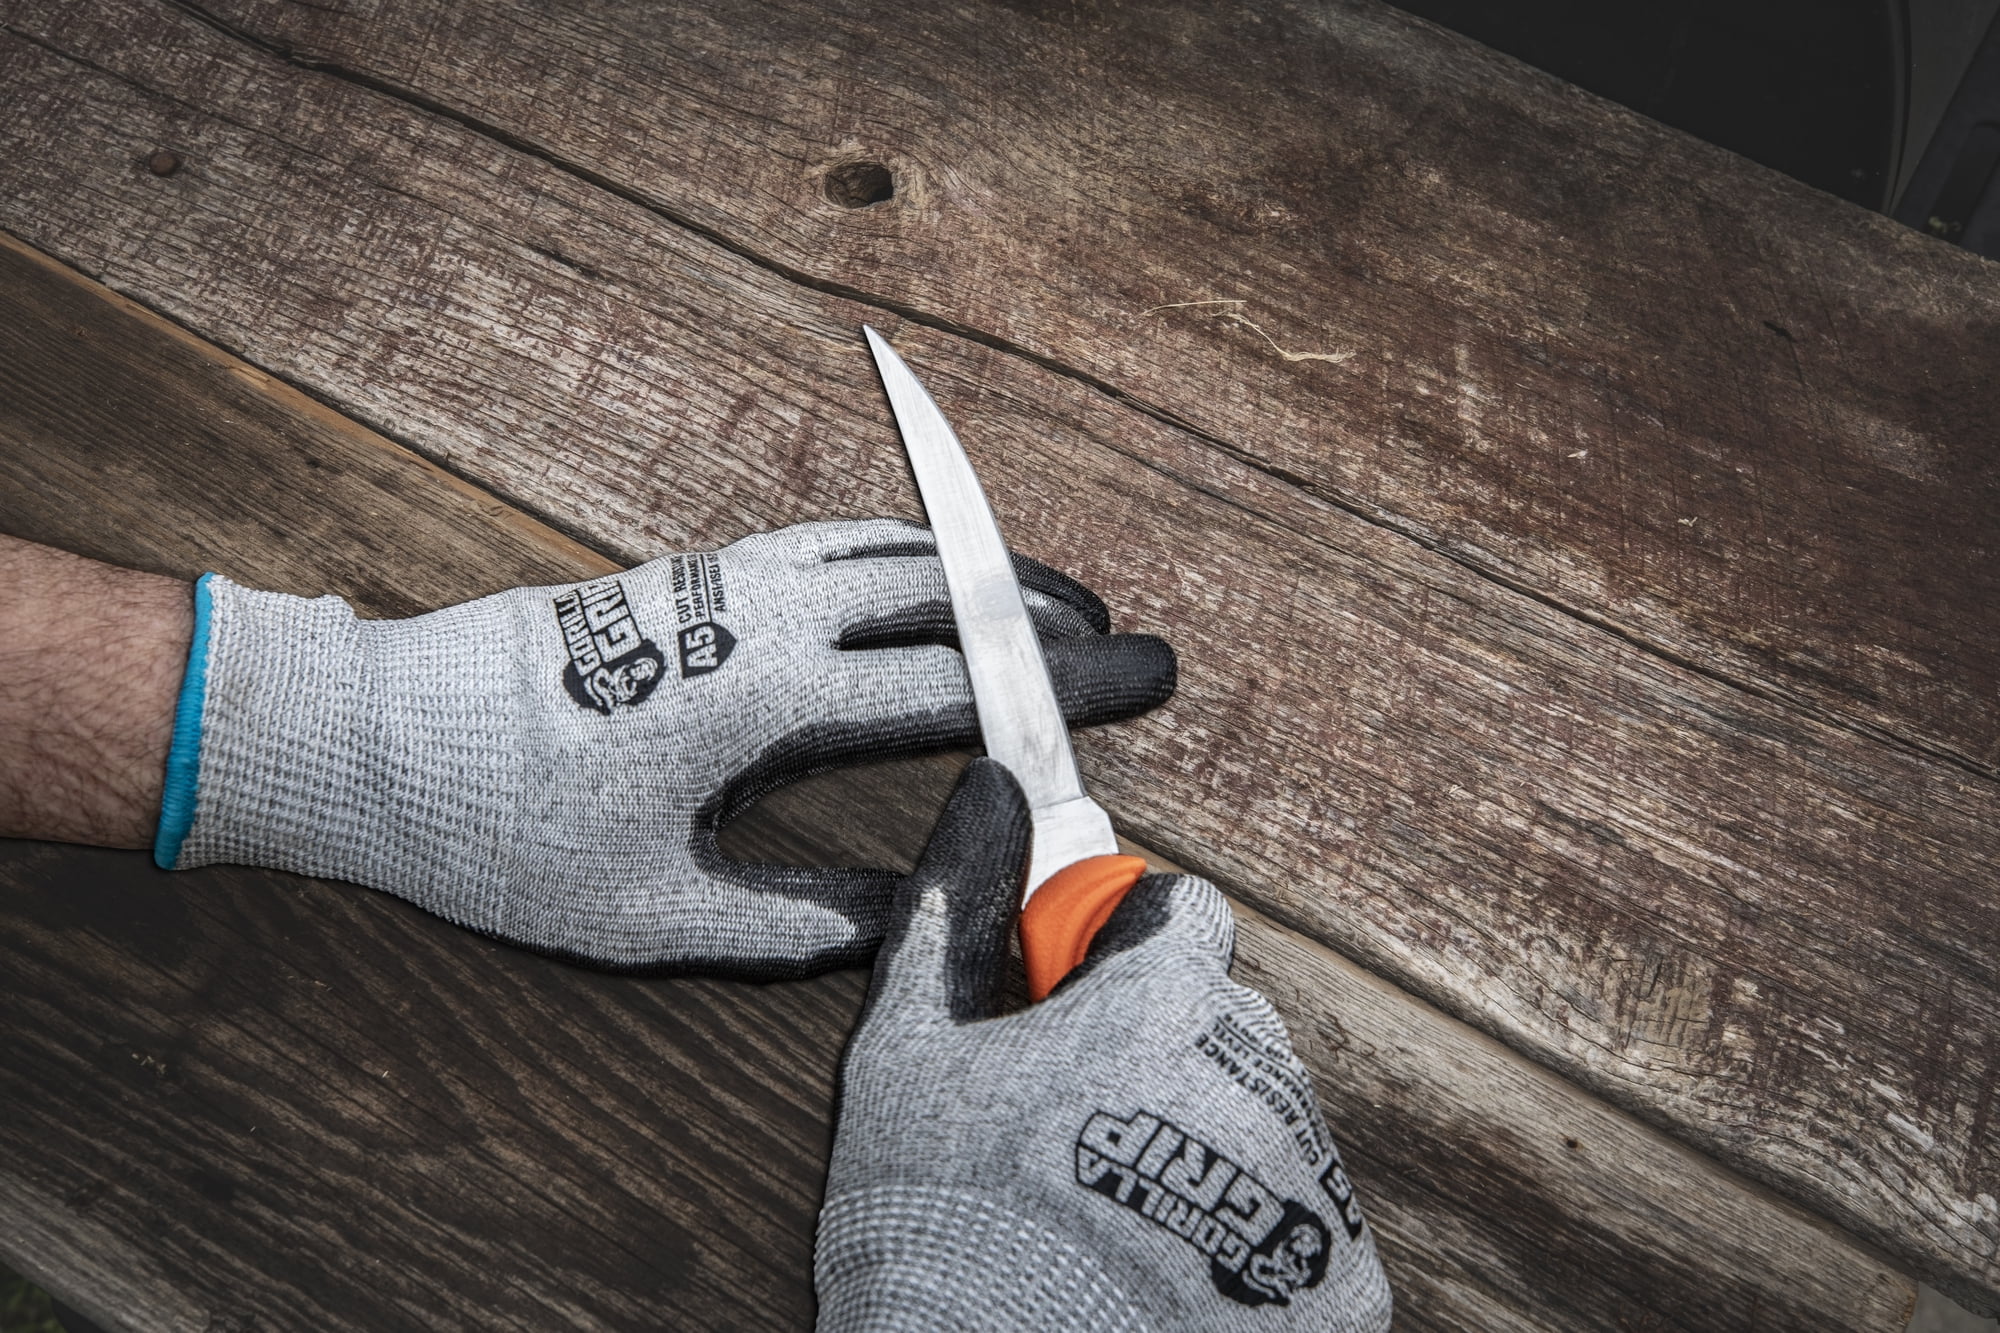 Gorilla Grip RhinoFlex A5 Cut Protection Hi Vis Work Gloves, No Slip  Polymer Grip, Size Large, Model# 25262-26 